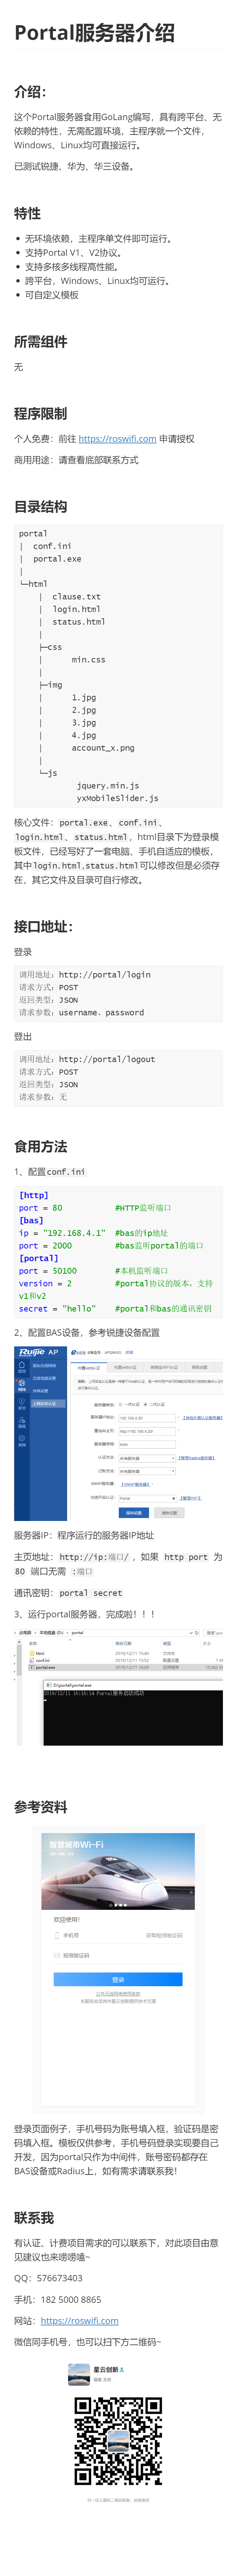 Portal服务器介绍.jpg